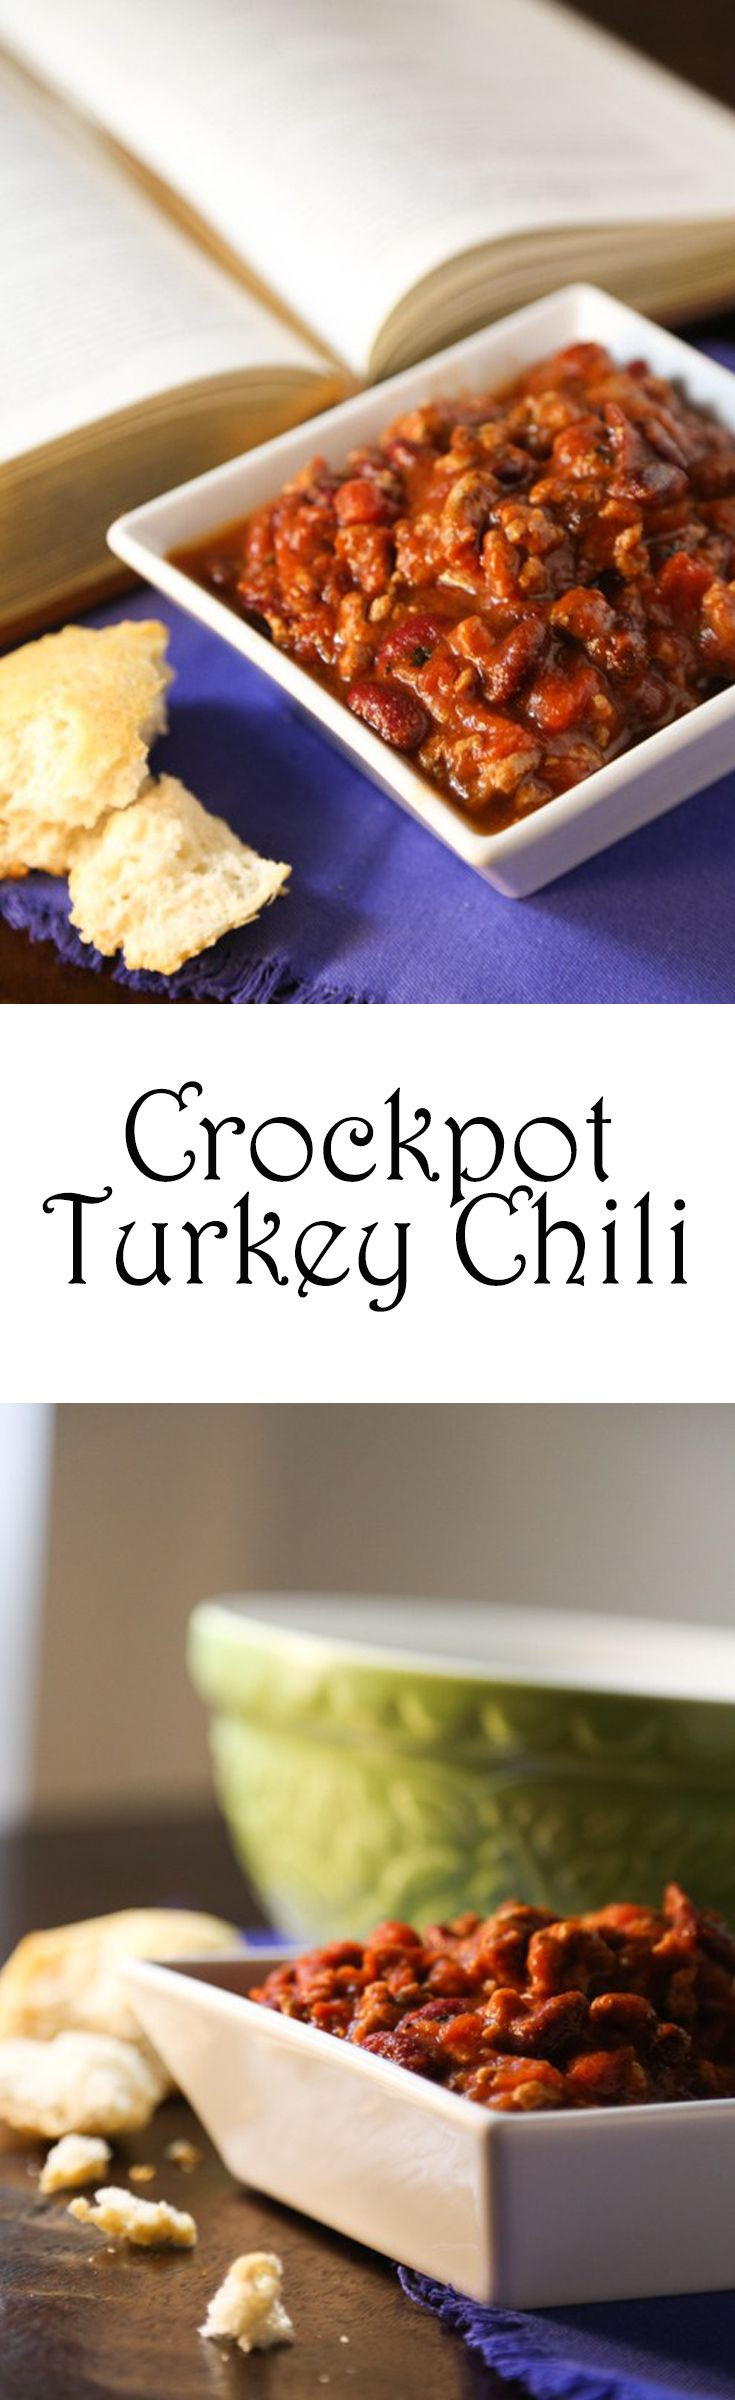 Low Calorie Turkey Chili
 17 Best ideas about Crockpot Turkey Chili on Pinterest